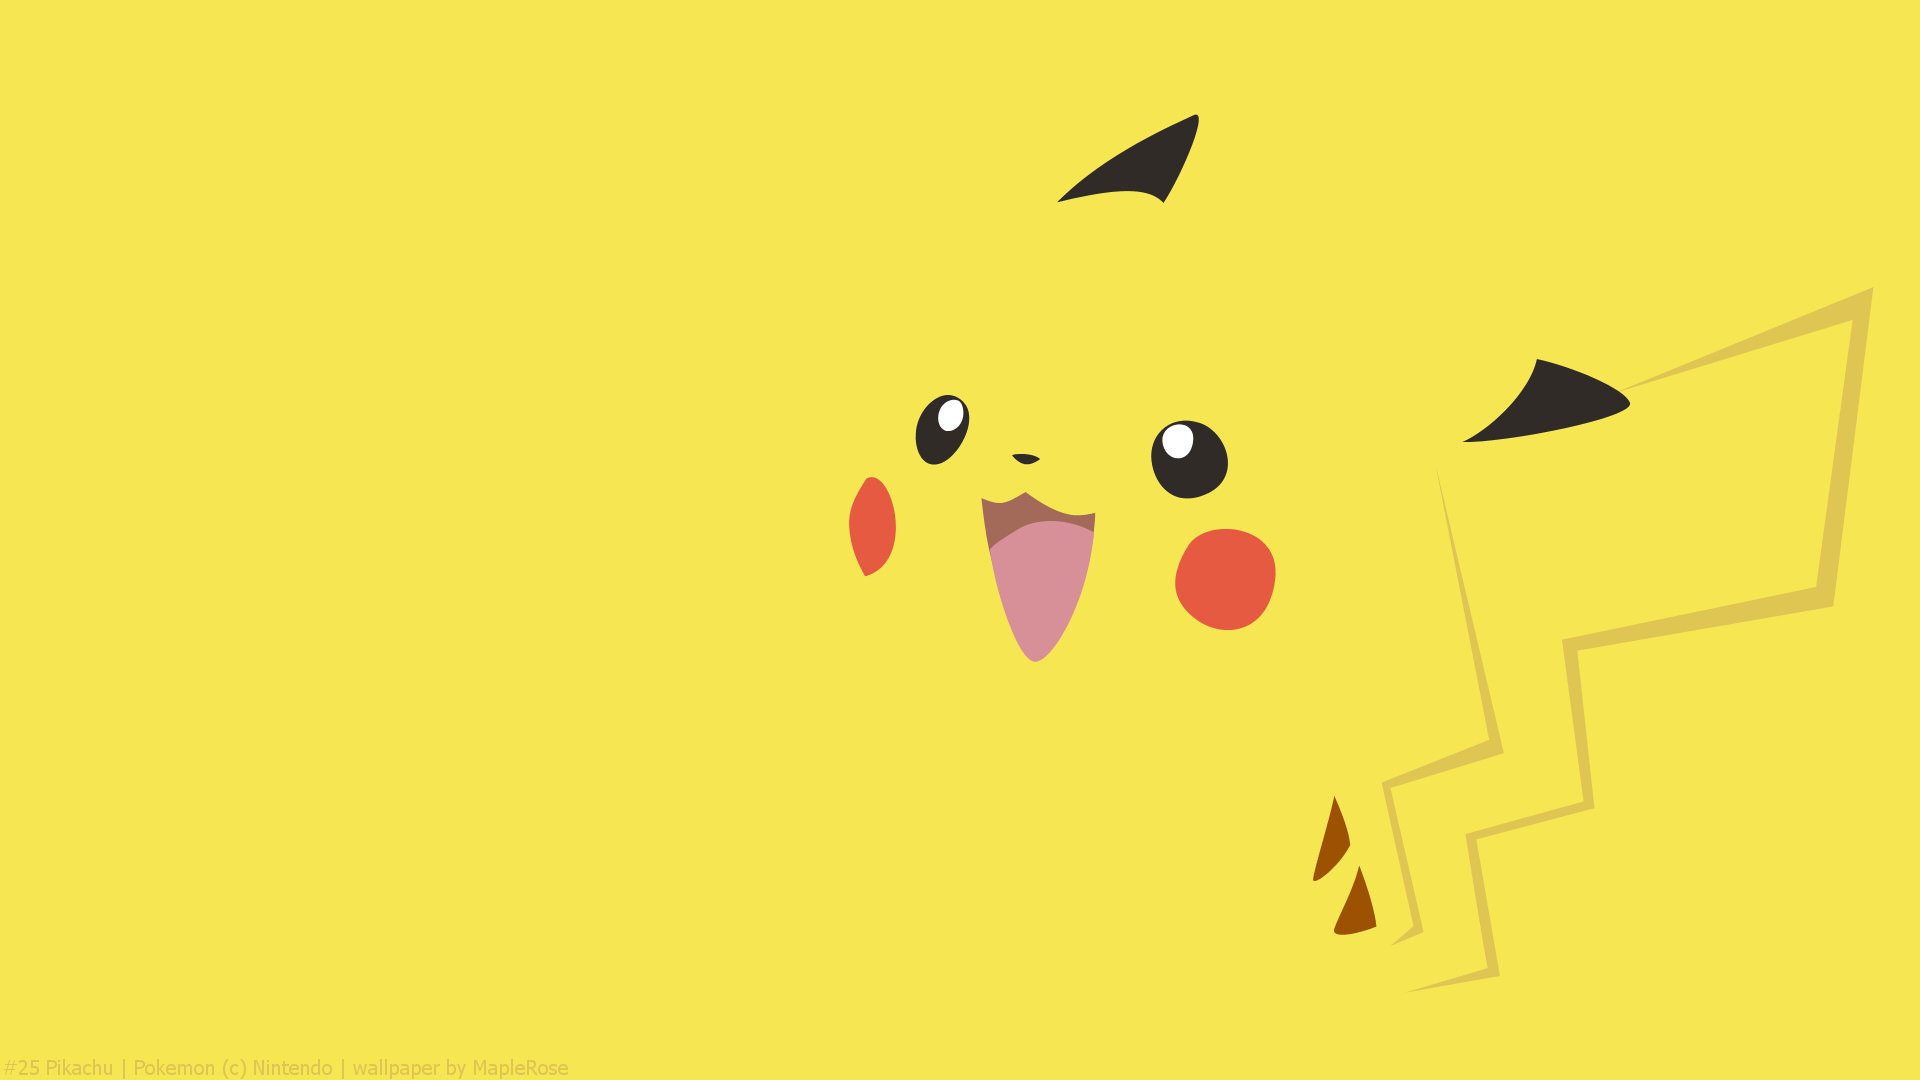 [75+] Pokemon Pikachu Wallpapers | WallpaperSafari.com